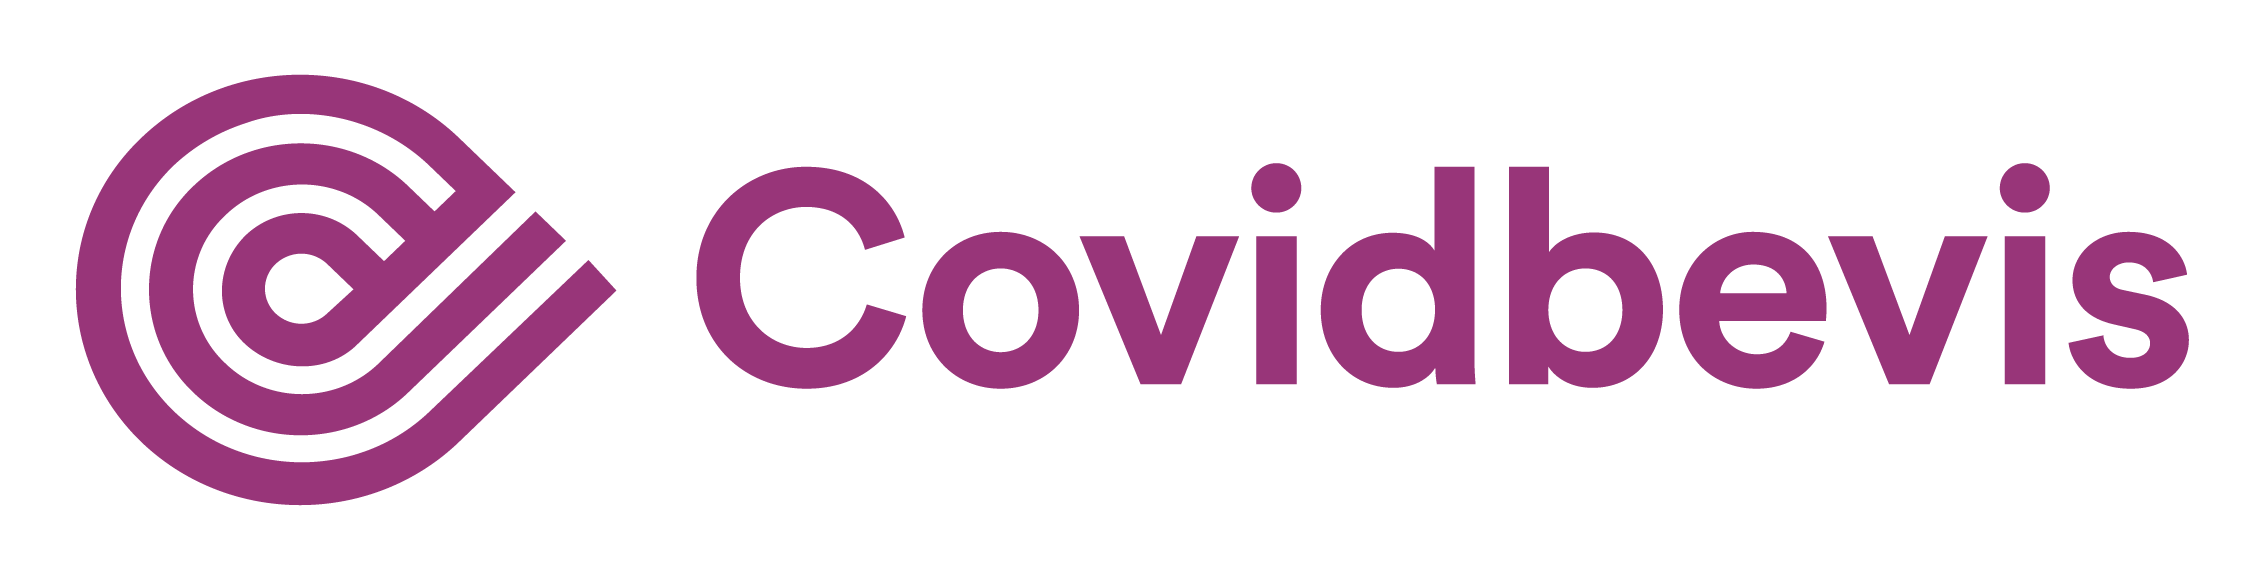 Covidbevis Logo